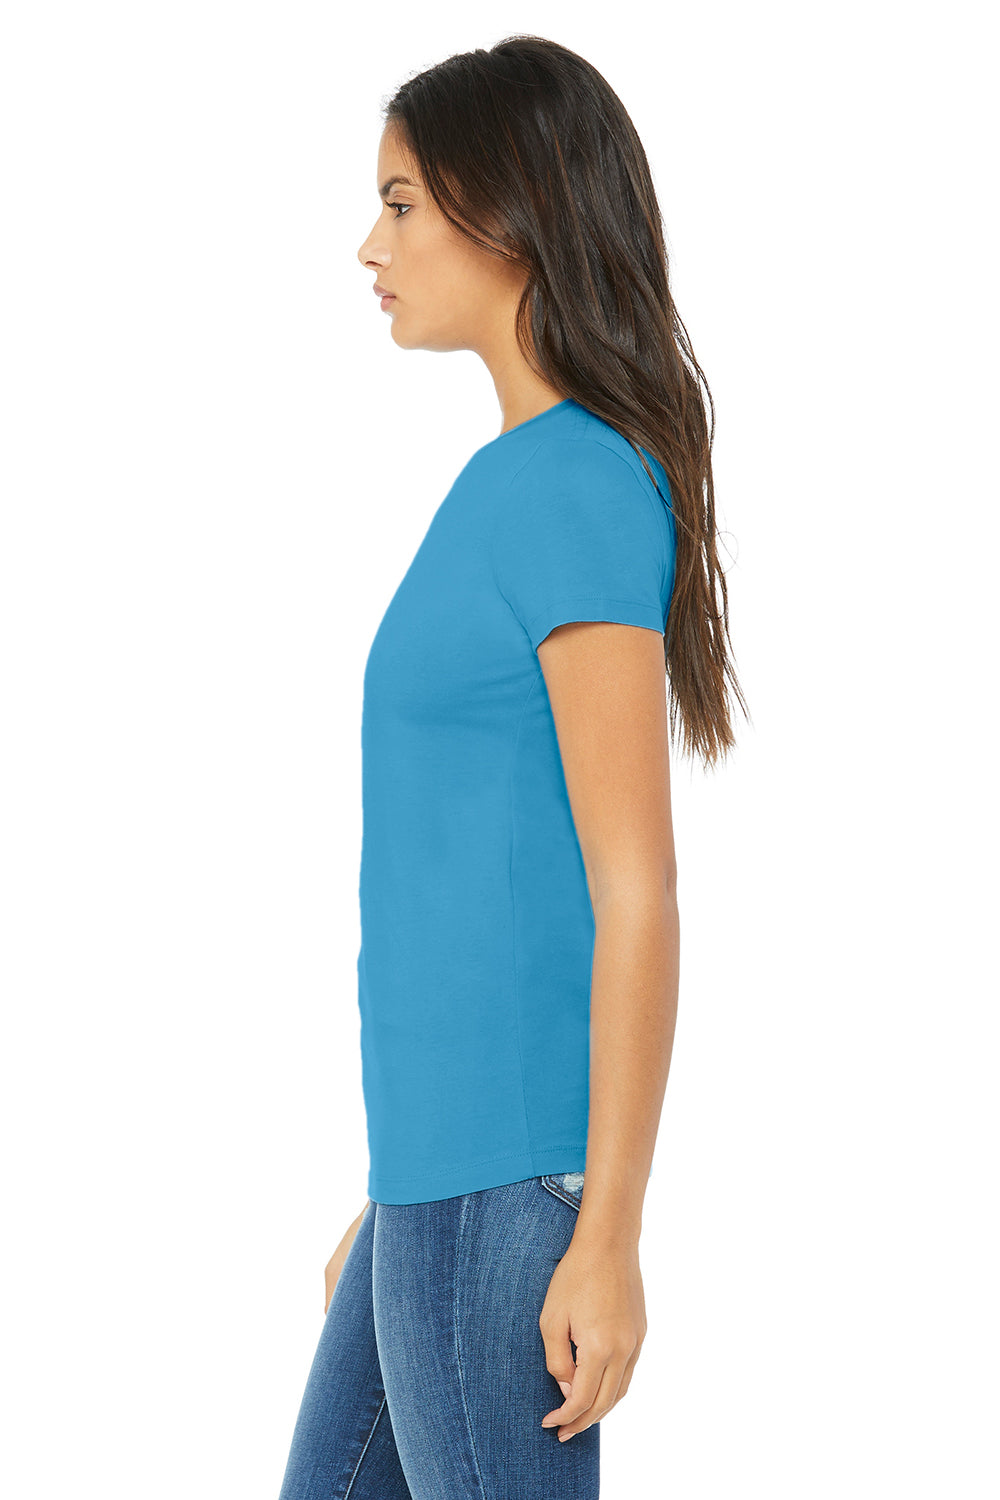 Bella + Canvas 6004 Womens The Favorite Short Sleeve Crewneck T-Shirt Aqua Blue Side